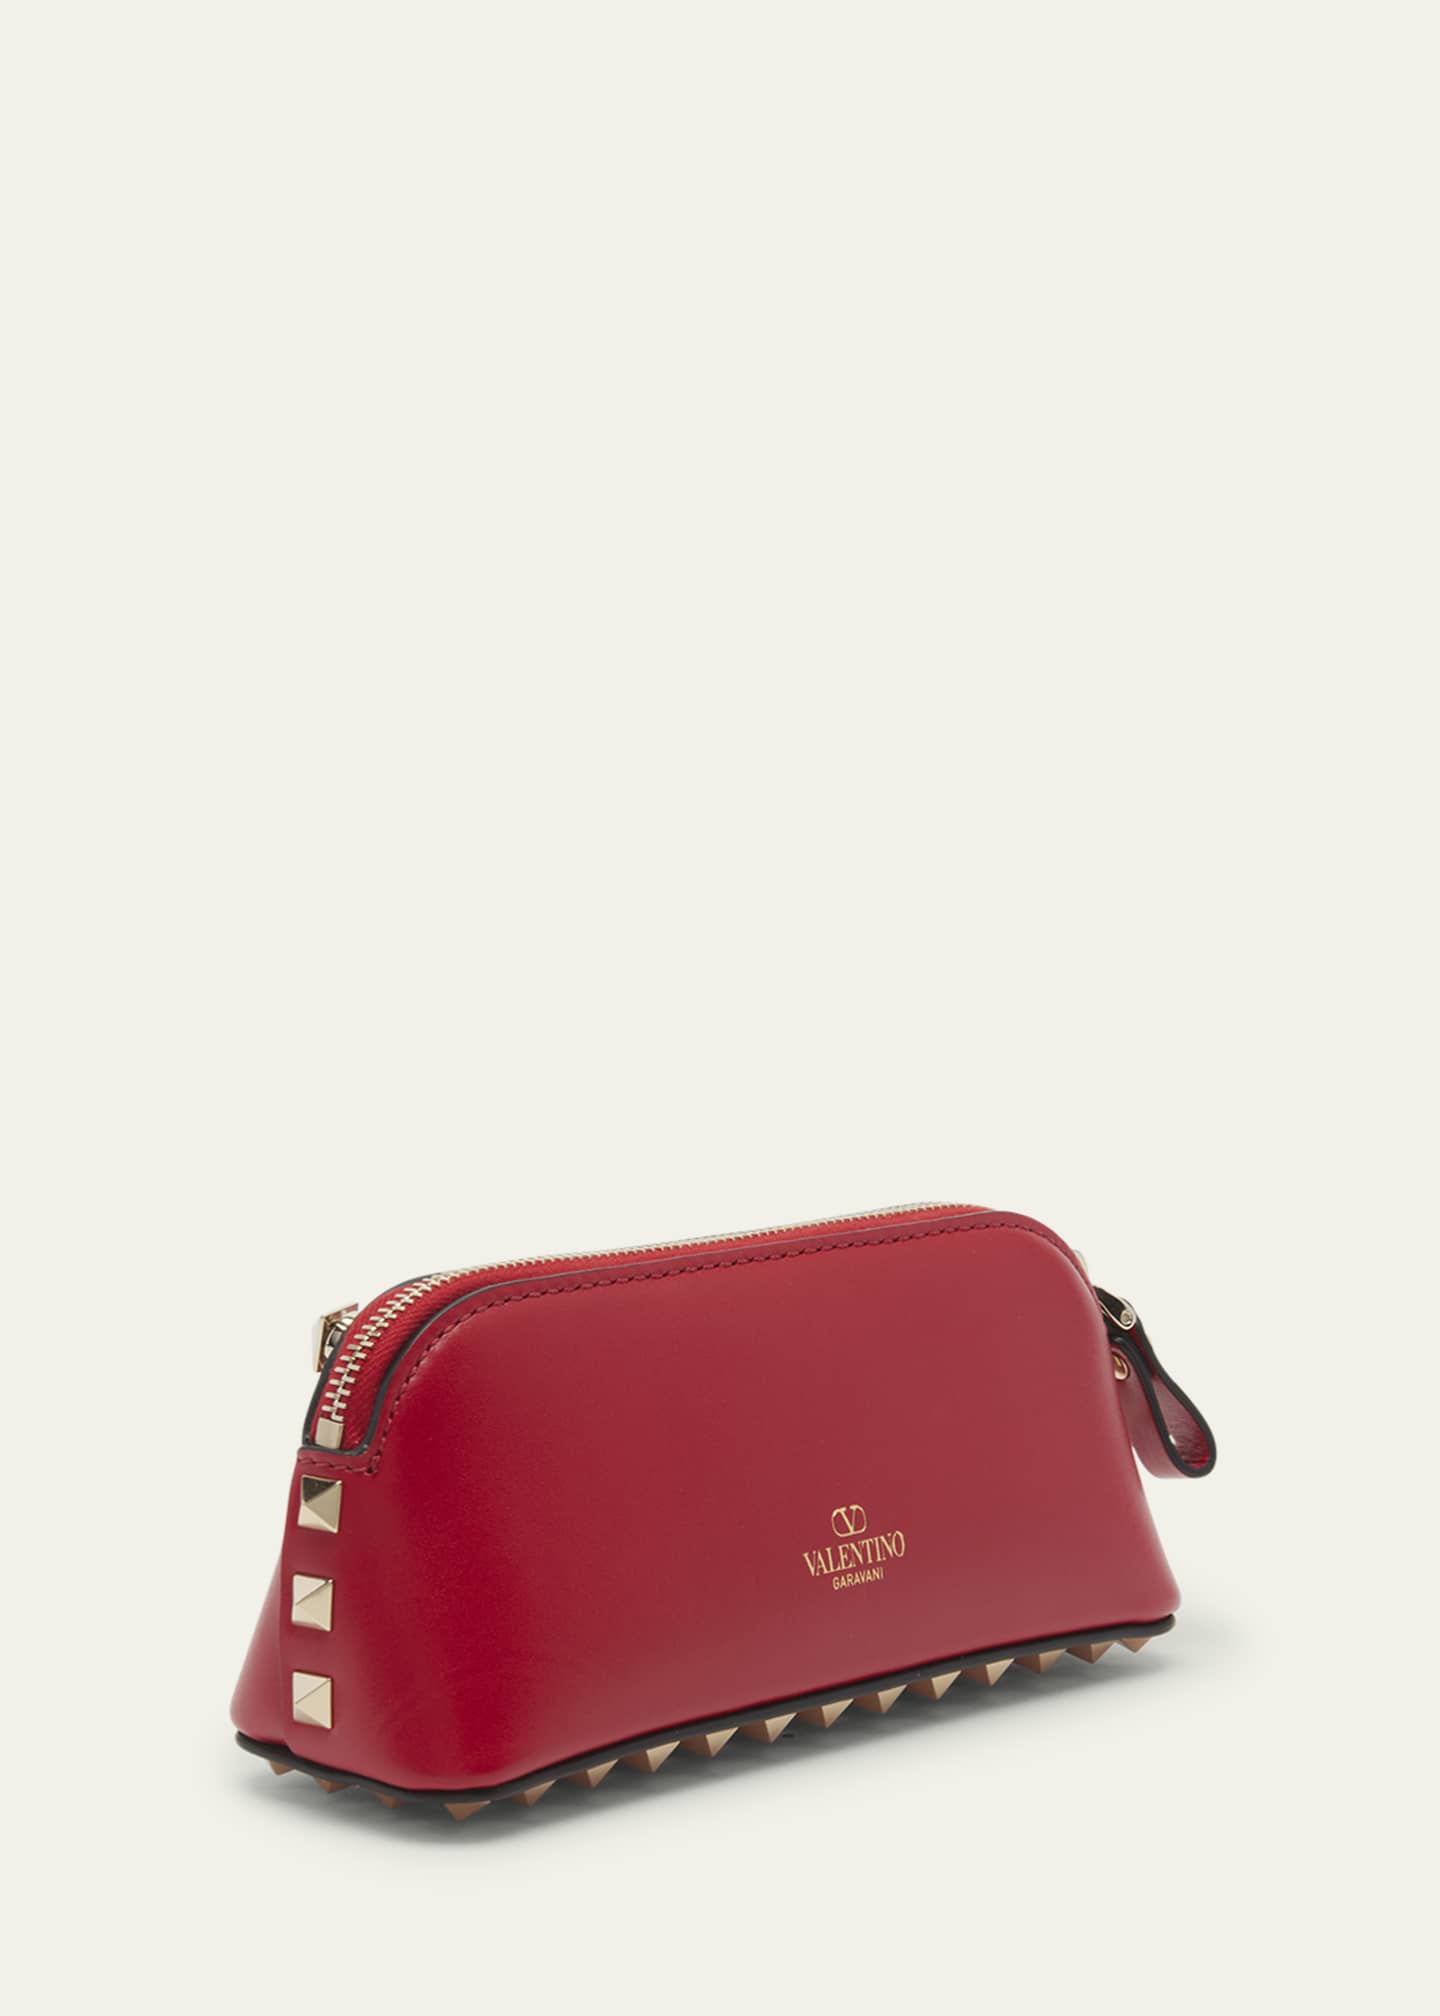 Valentino Garavani Bag Red Mini Rock Stud Clutch Cross Body Wallet